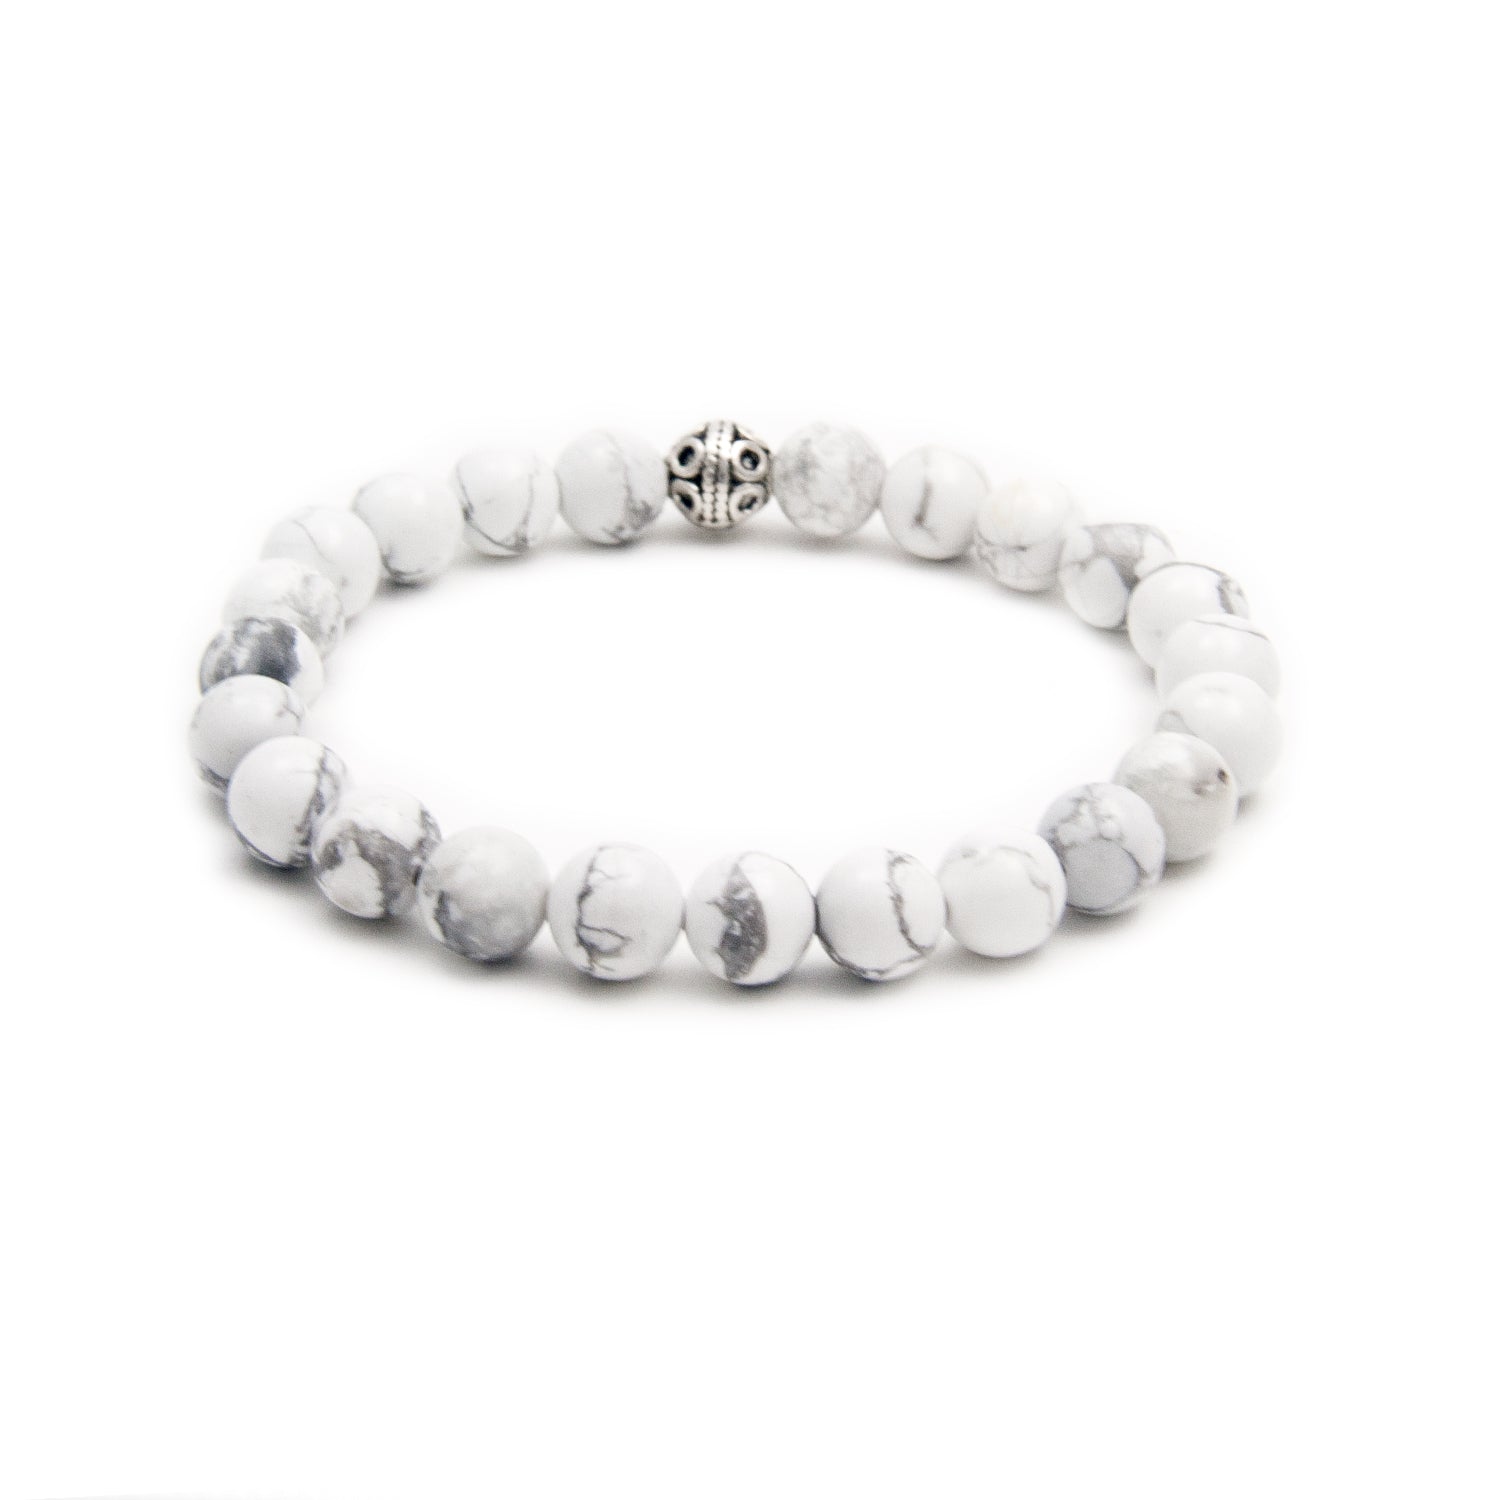 Stone Bead Bracelet - Howlite White Marble